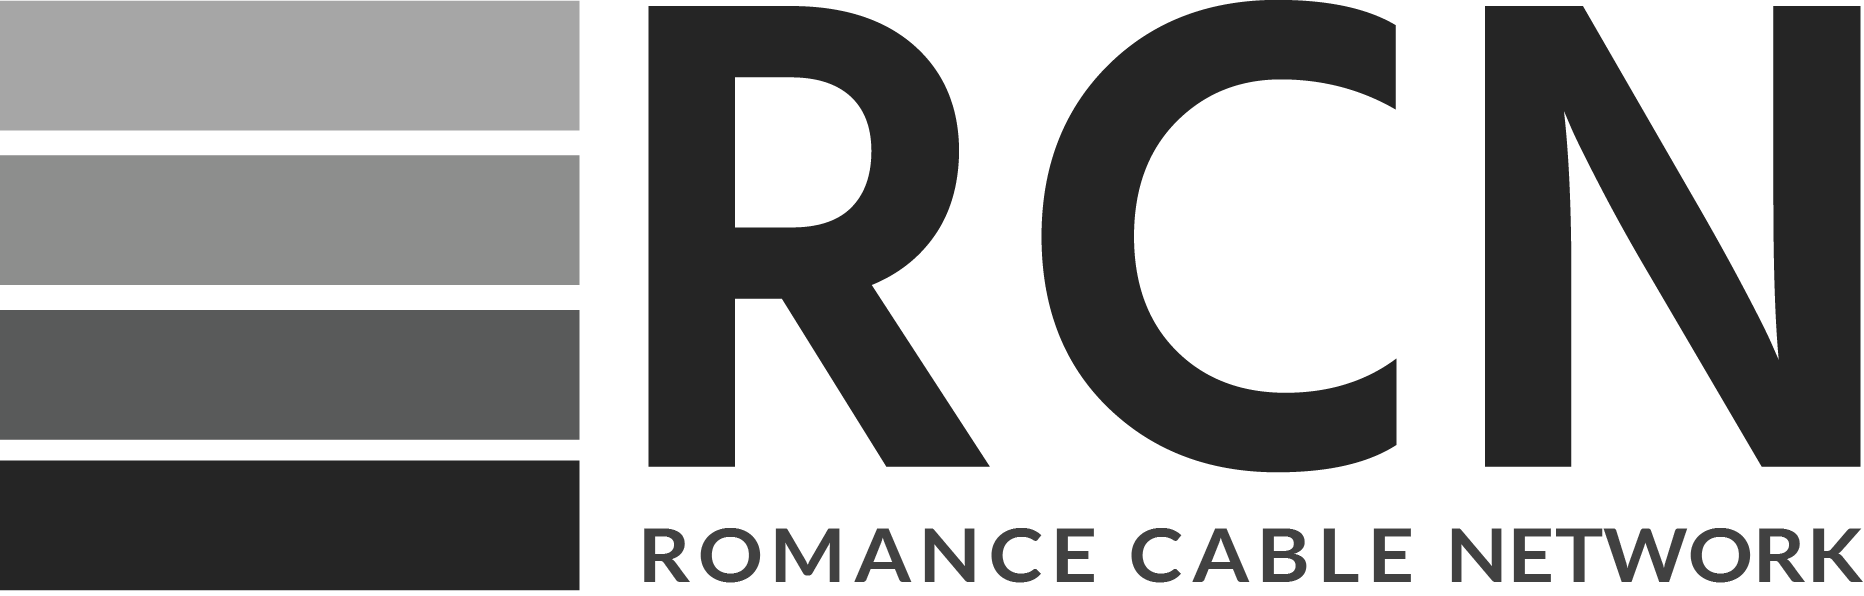 Romance Cable Network-logo